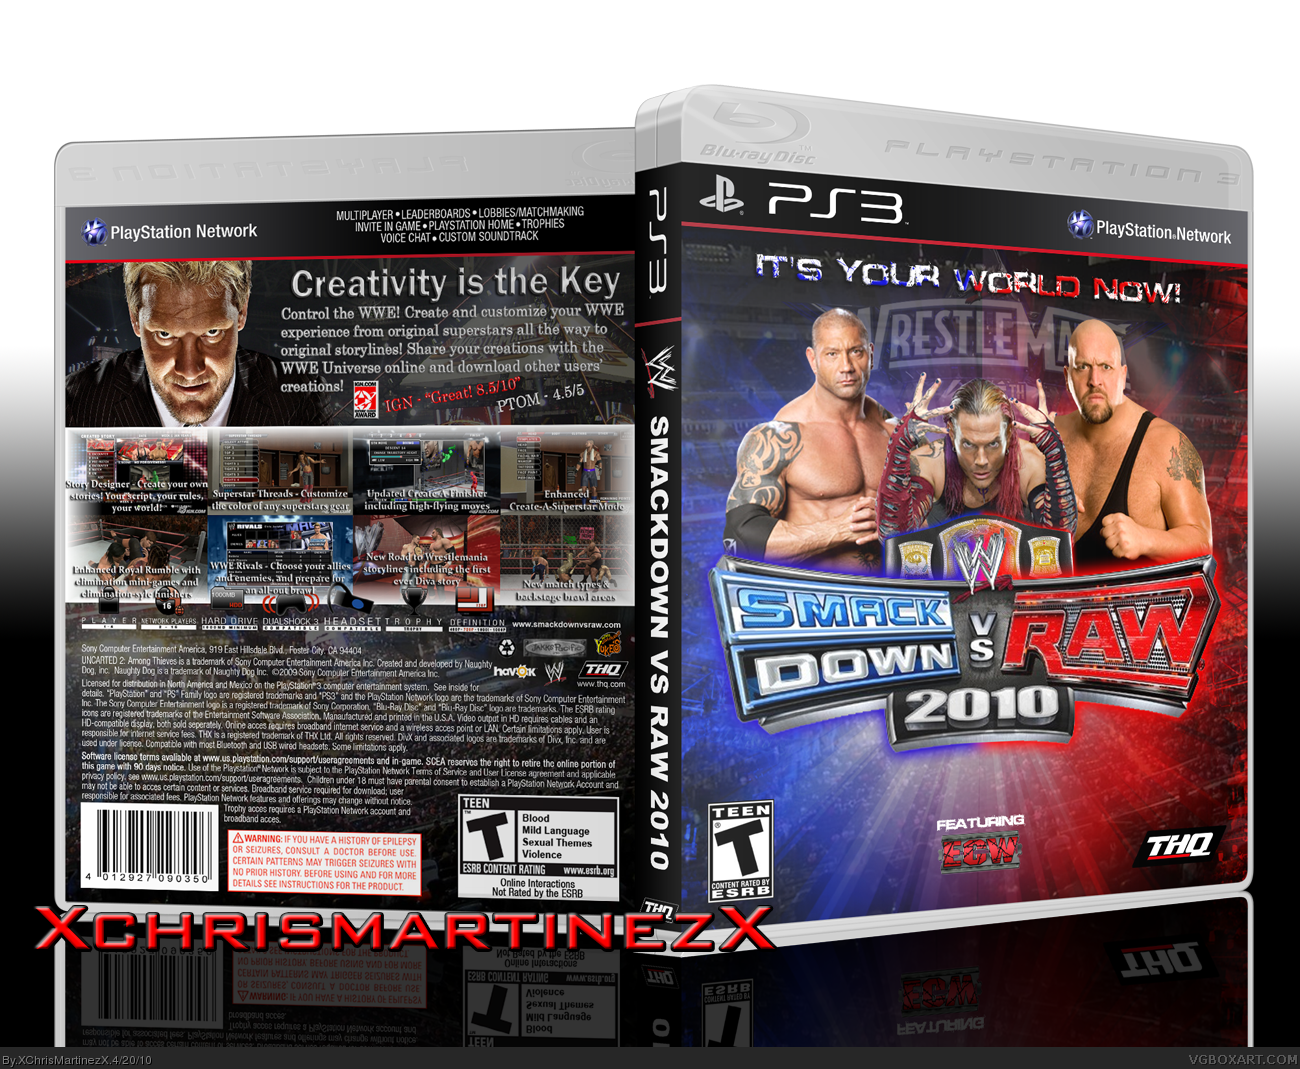 WWE SmackDown vs. Raw 2010 box cover